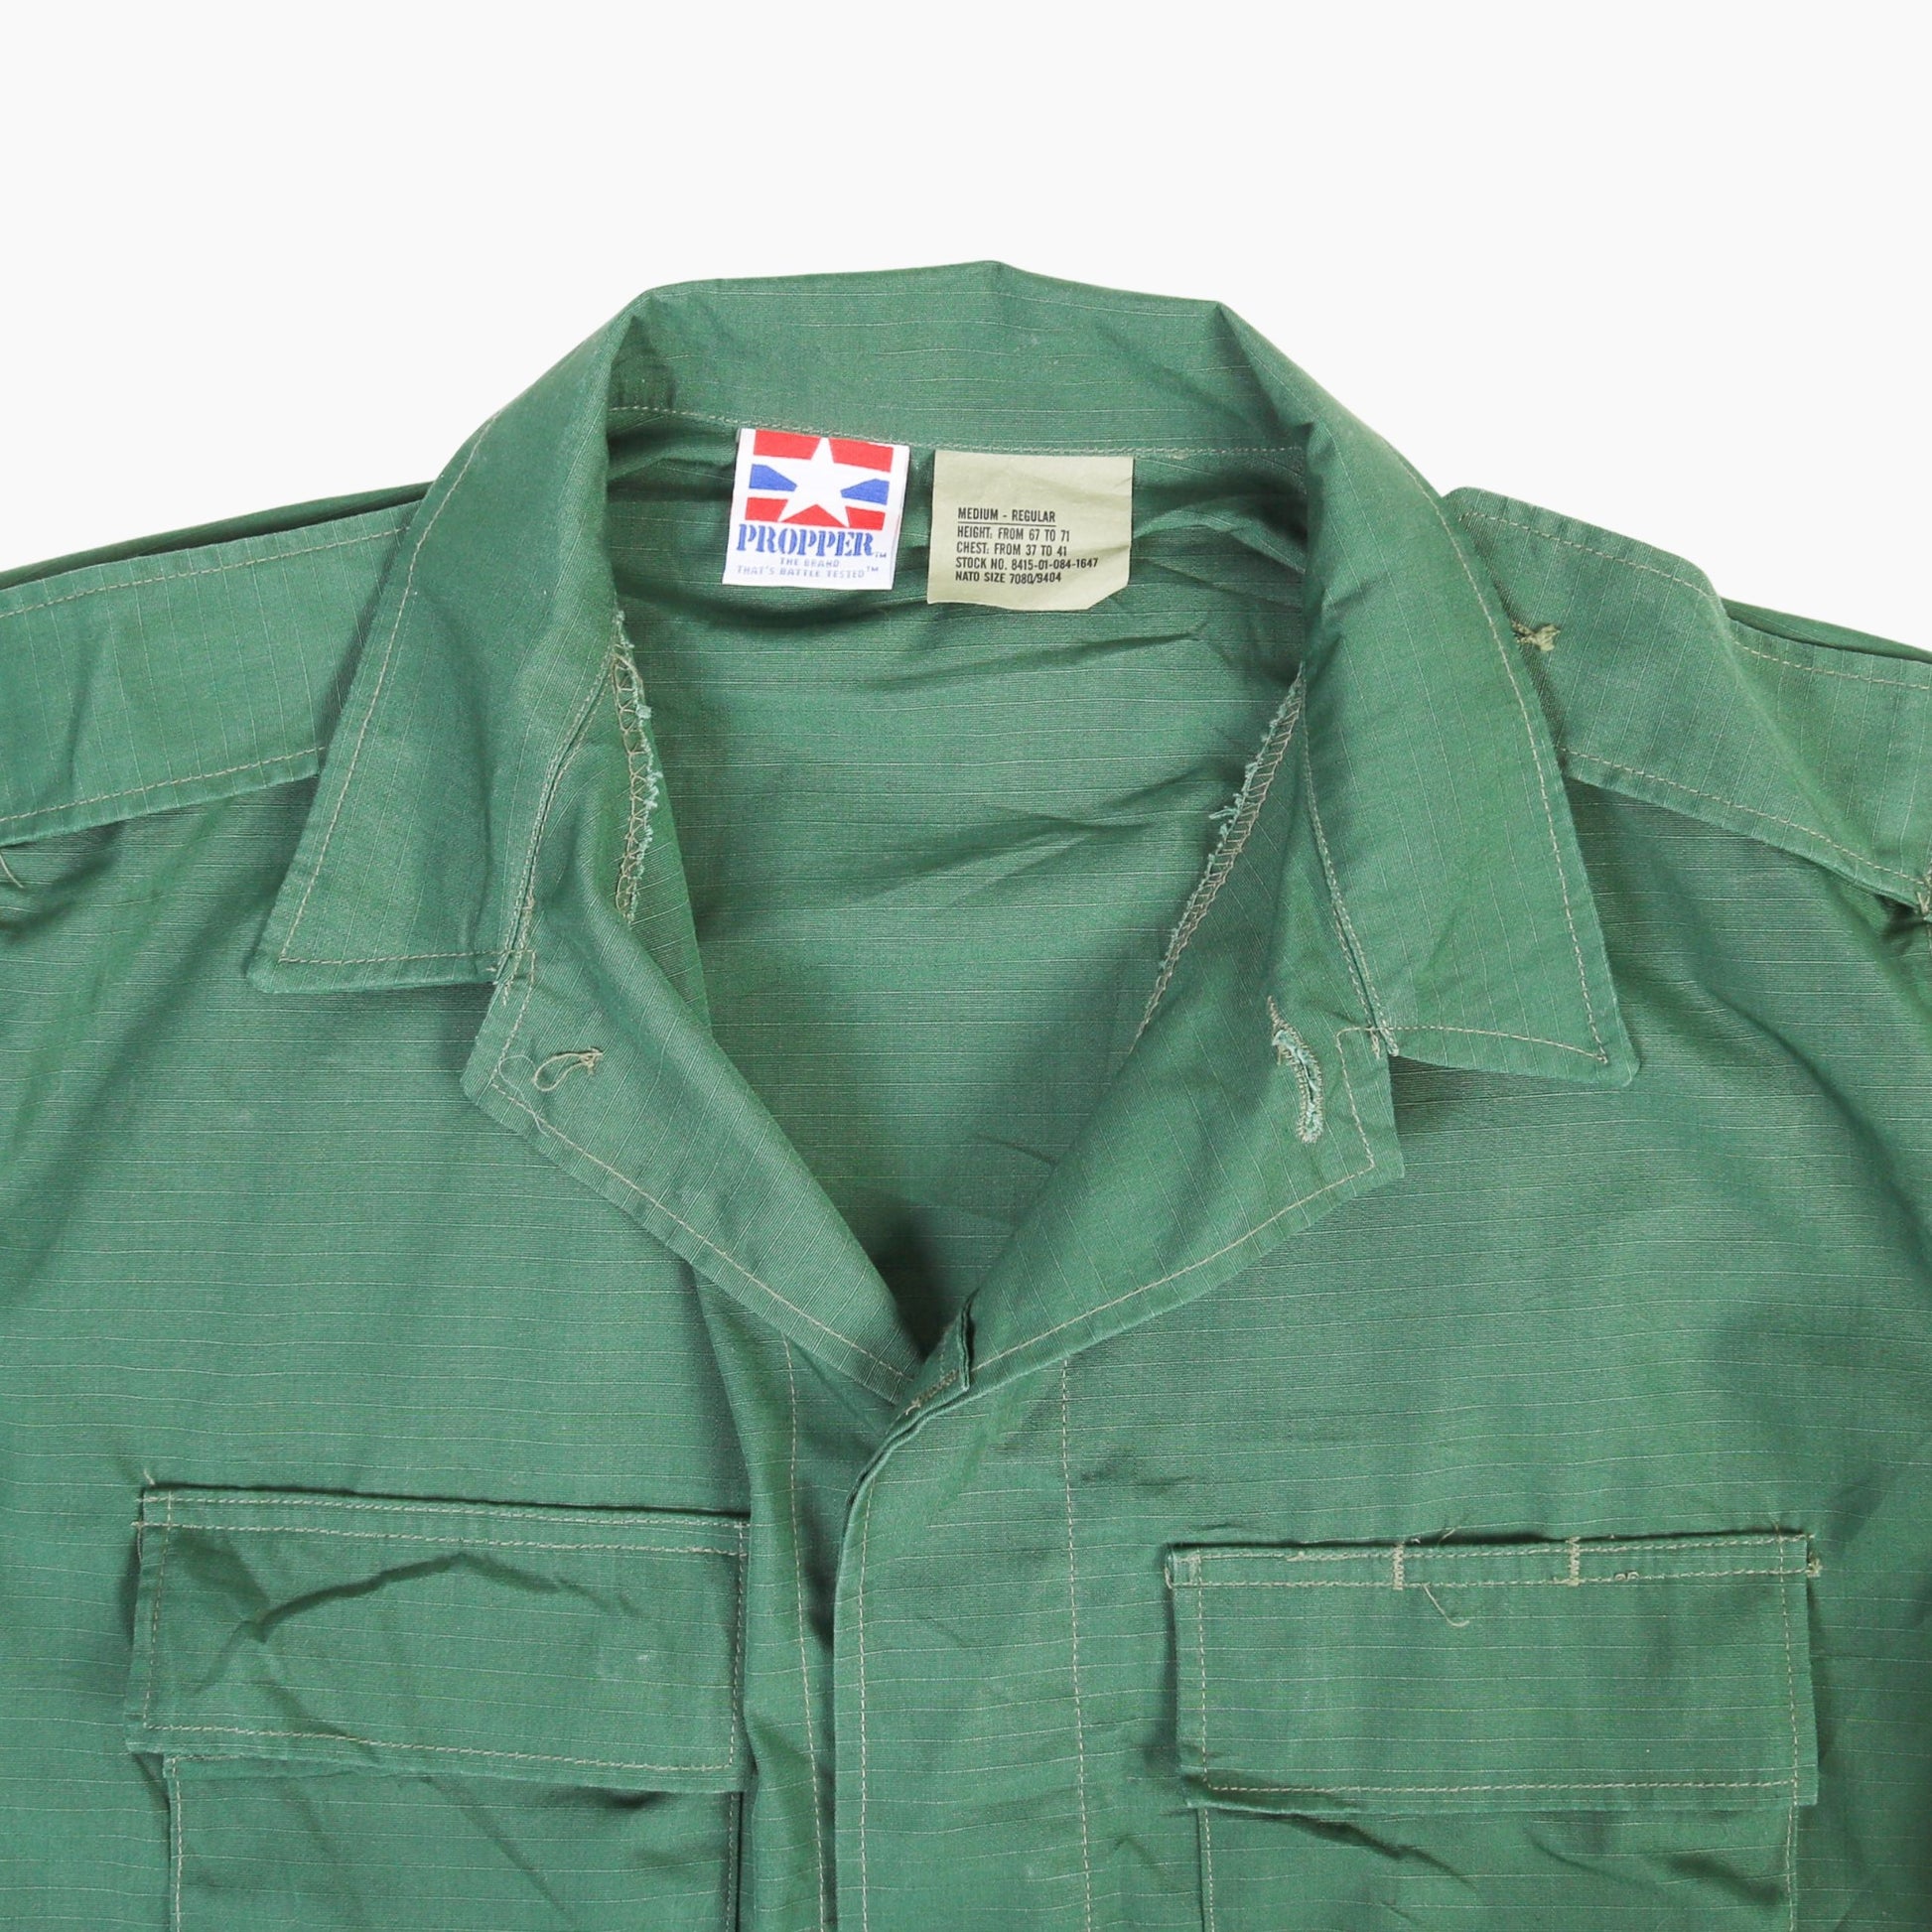 Vintage Army Fatigue Shirt - American Madness